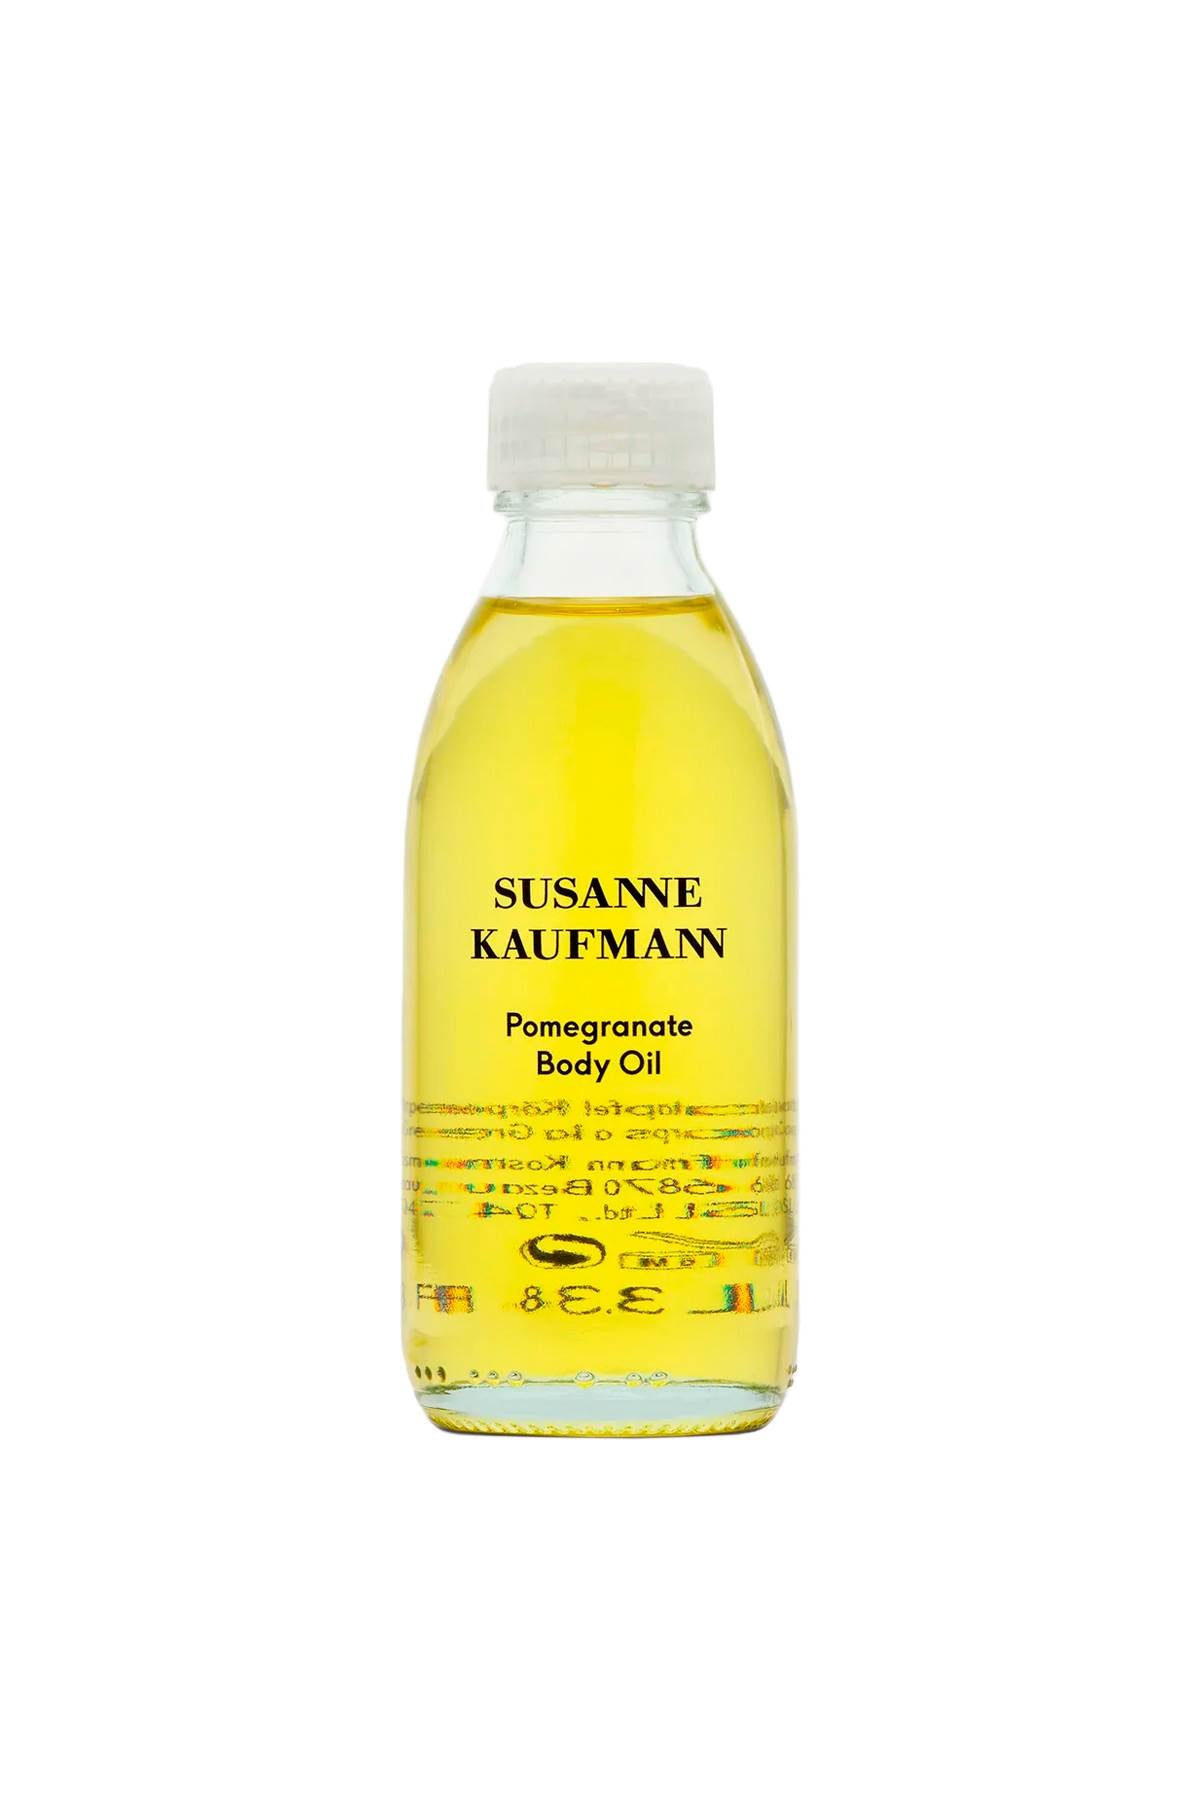 Susanne kaufmann pomegranate body oil - 100 ml-0